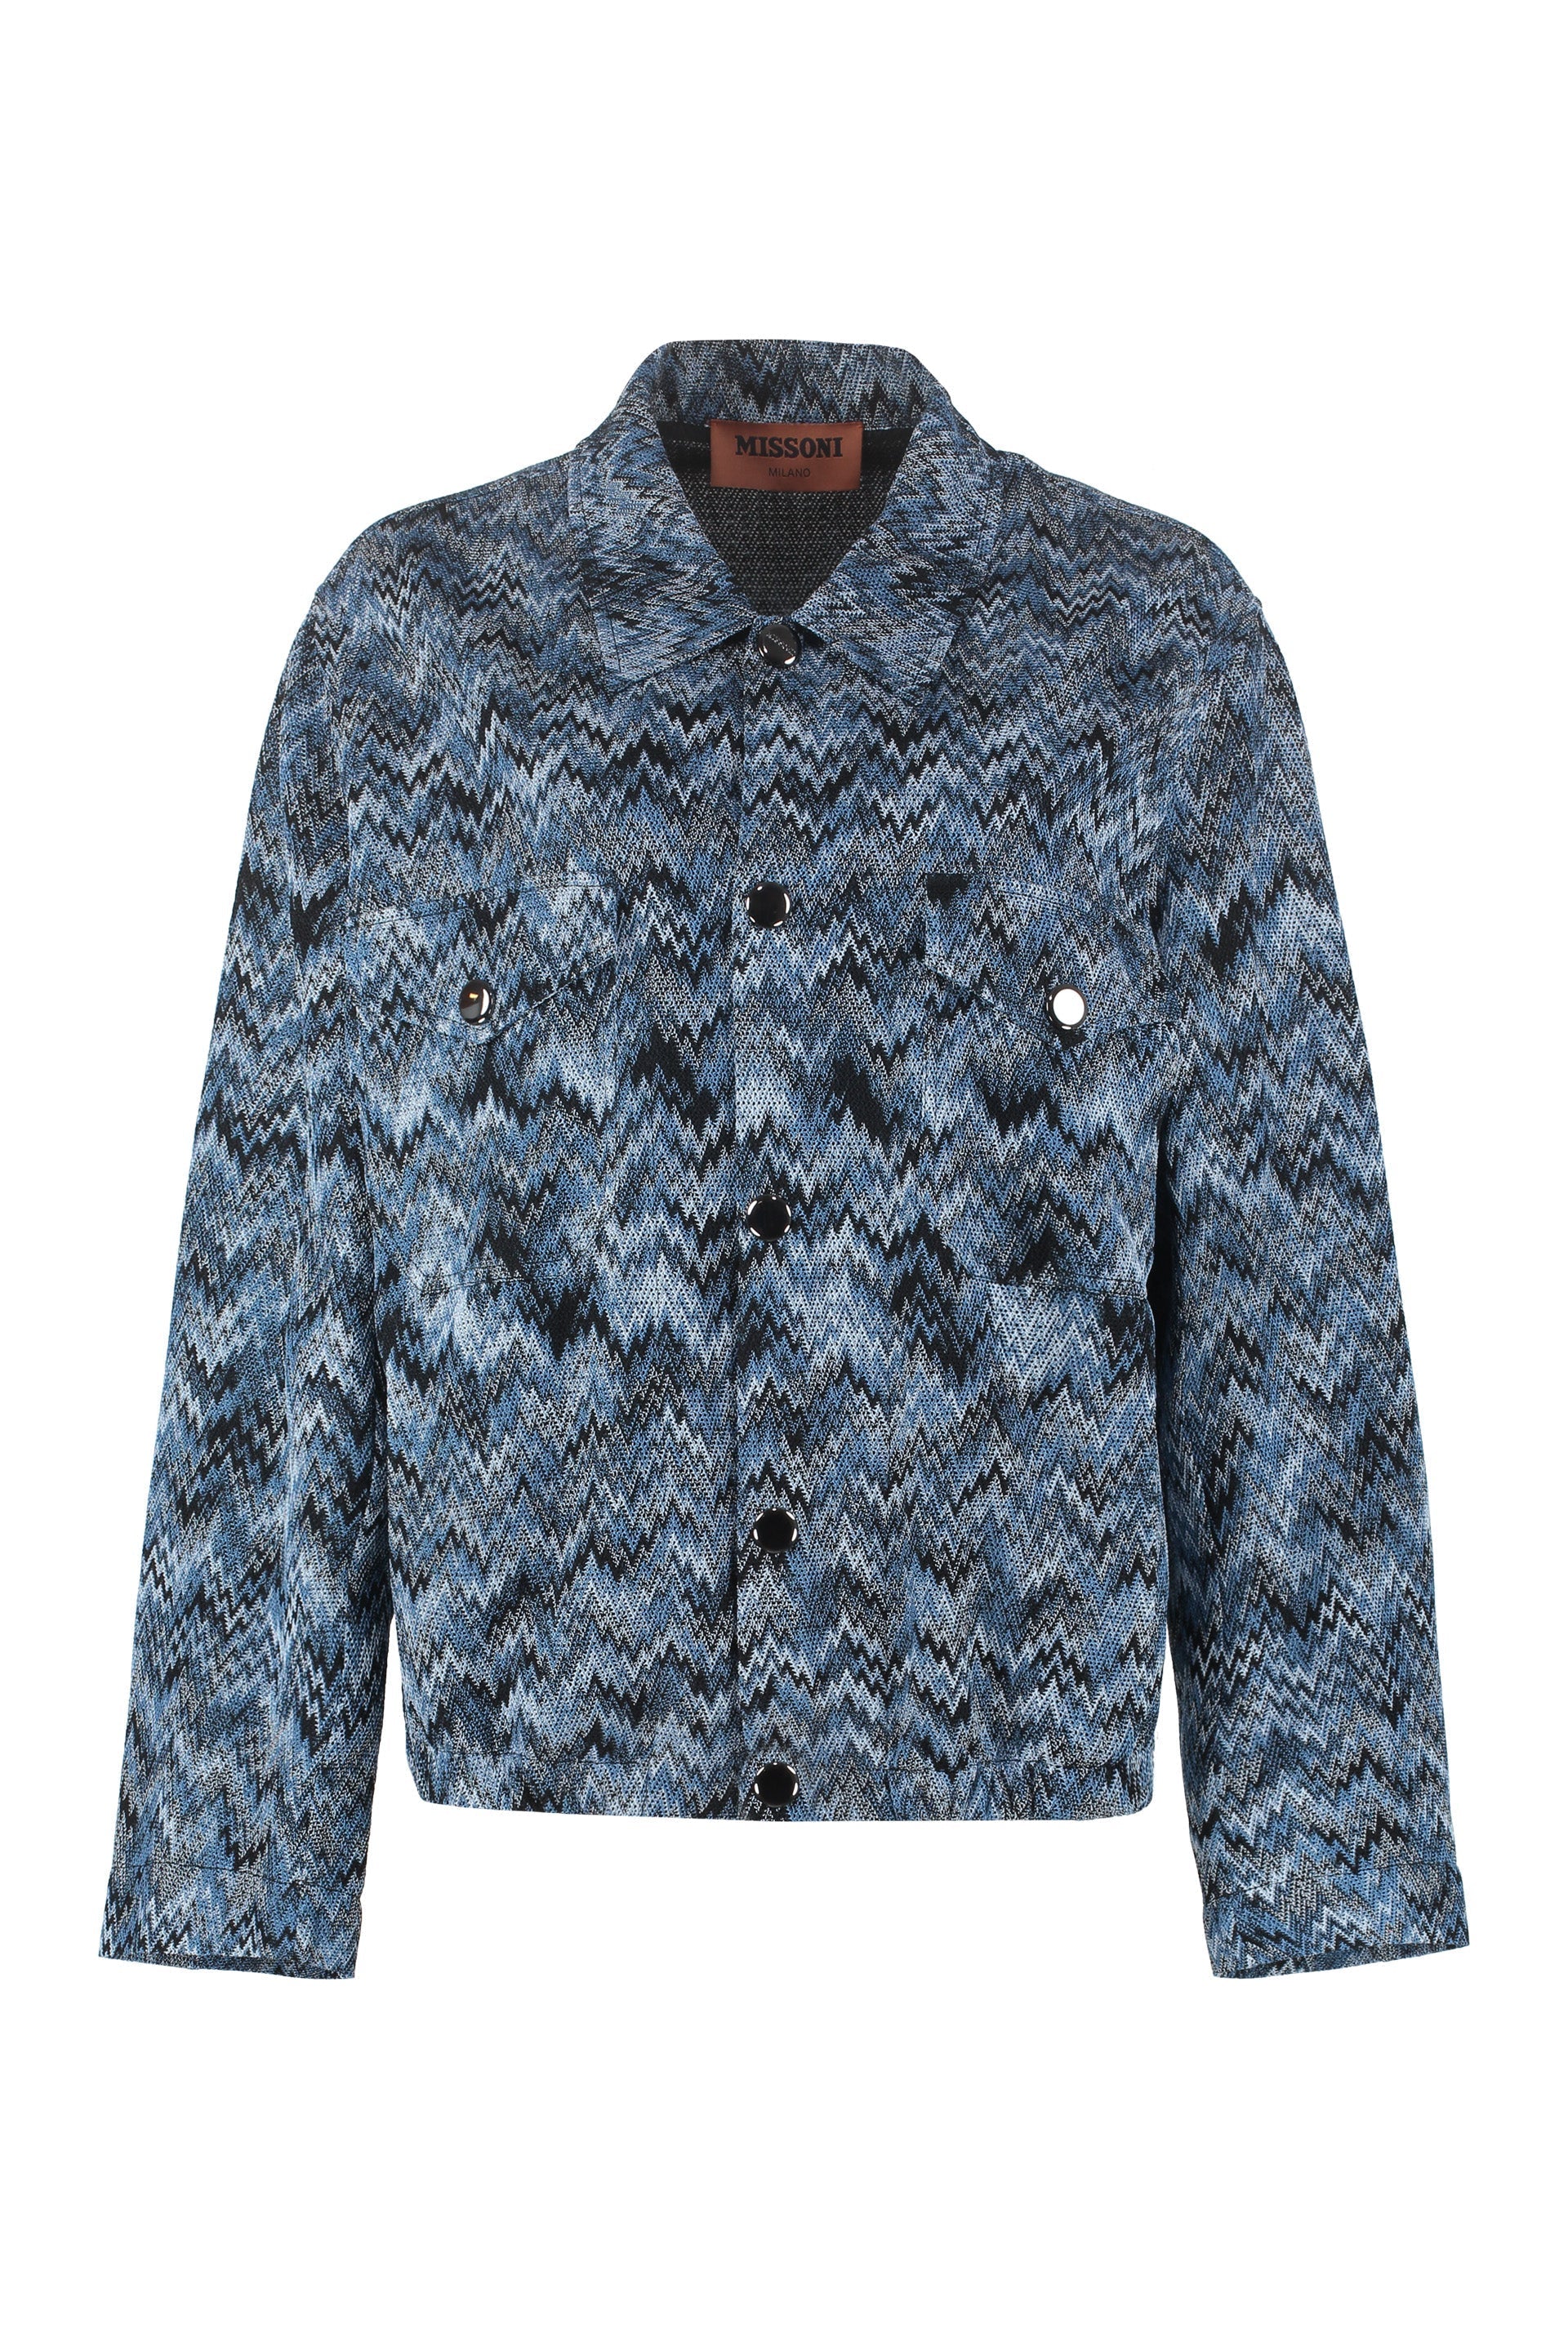 Chevron motif knitted jacket-Missoni-OUTLET-SALE-40-ARCHIVIST